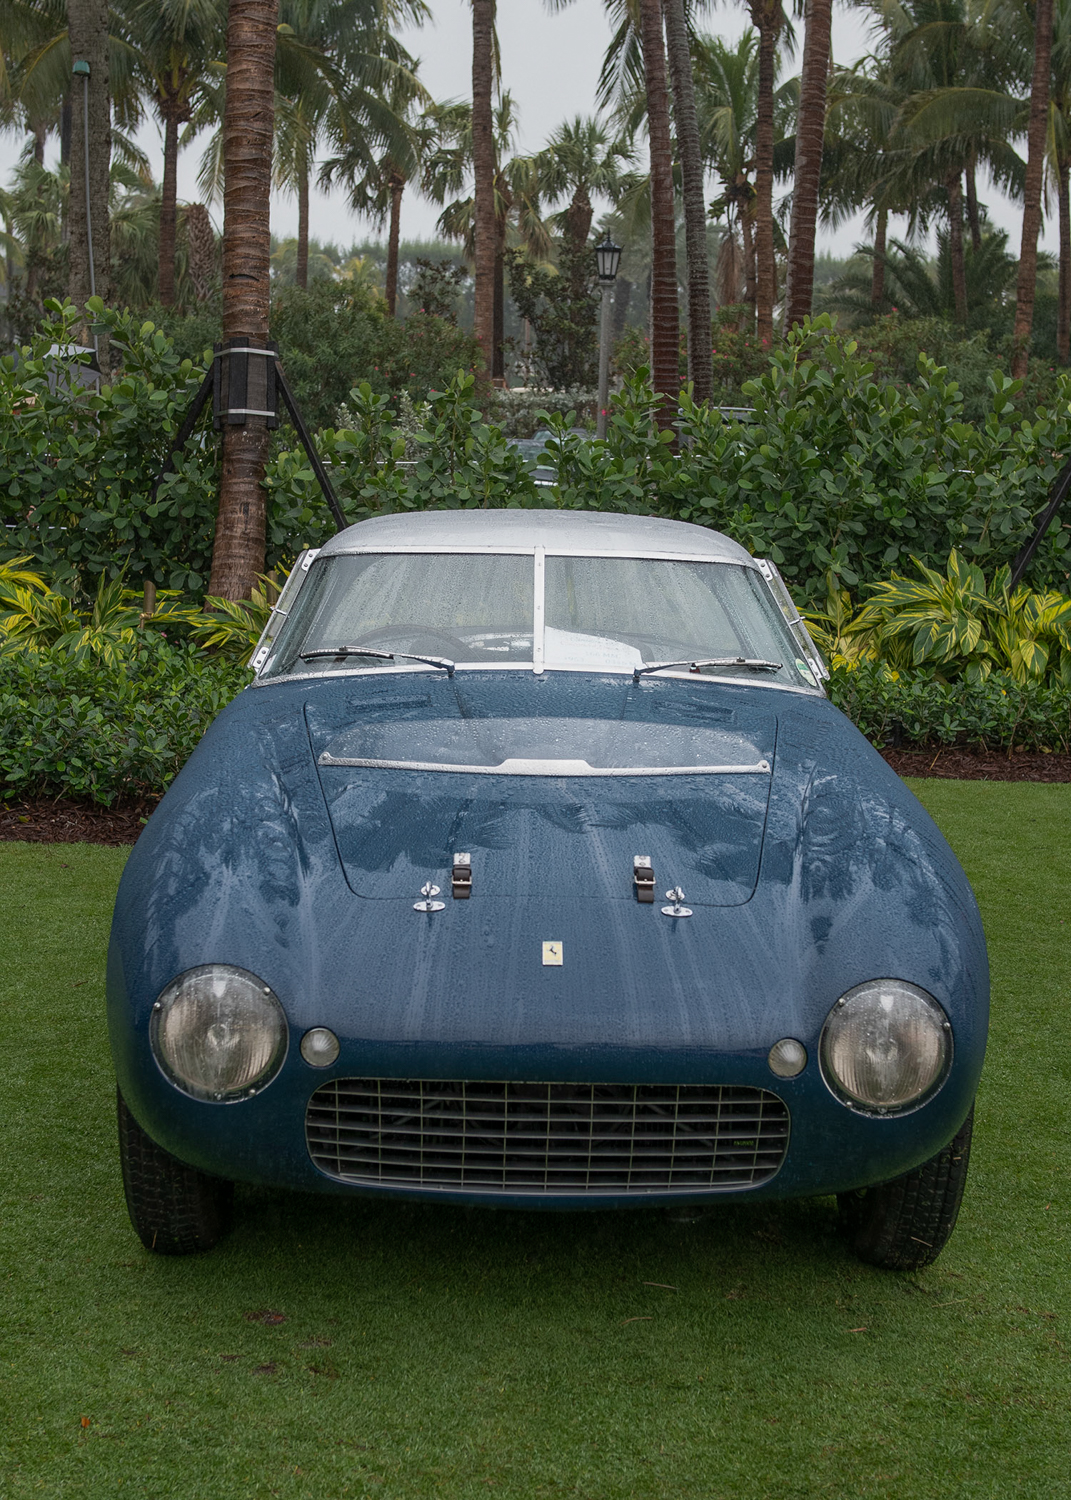 Cavallino 28   Concorso d'Eleganza
1953 Ferrari 166MM ser#0346 Chuck Andersen